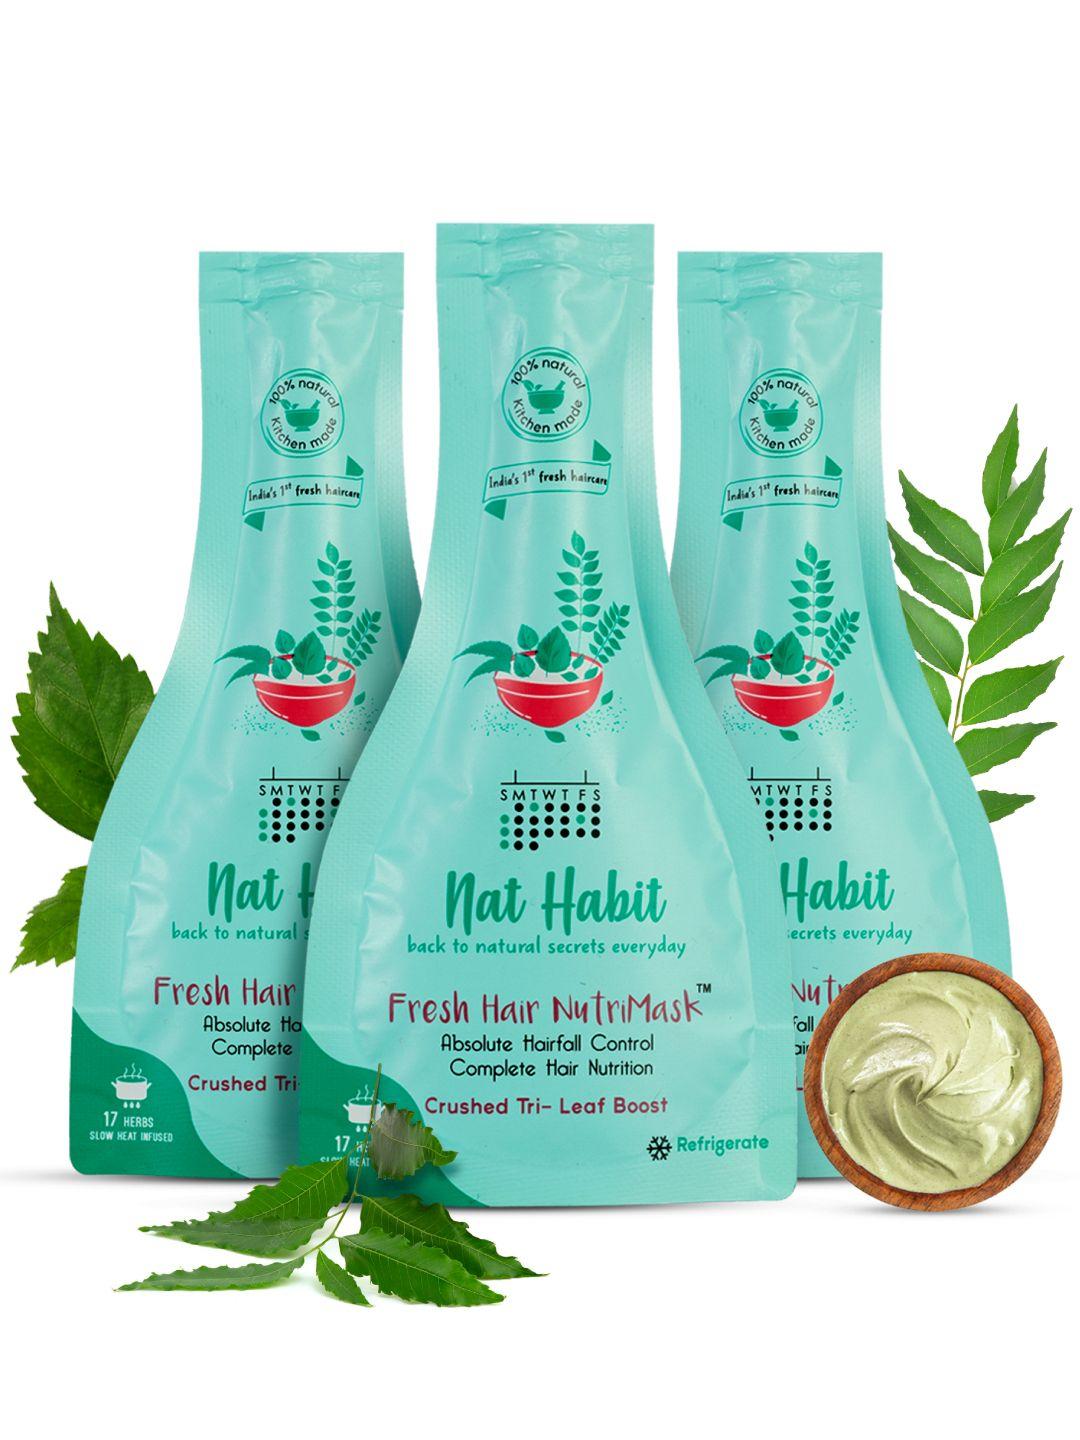 nat habit set of 3 tri-leaf fresh hair nutrimask for hairfall control - 40g each